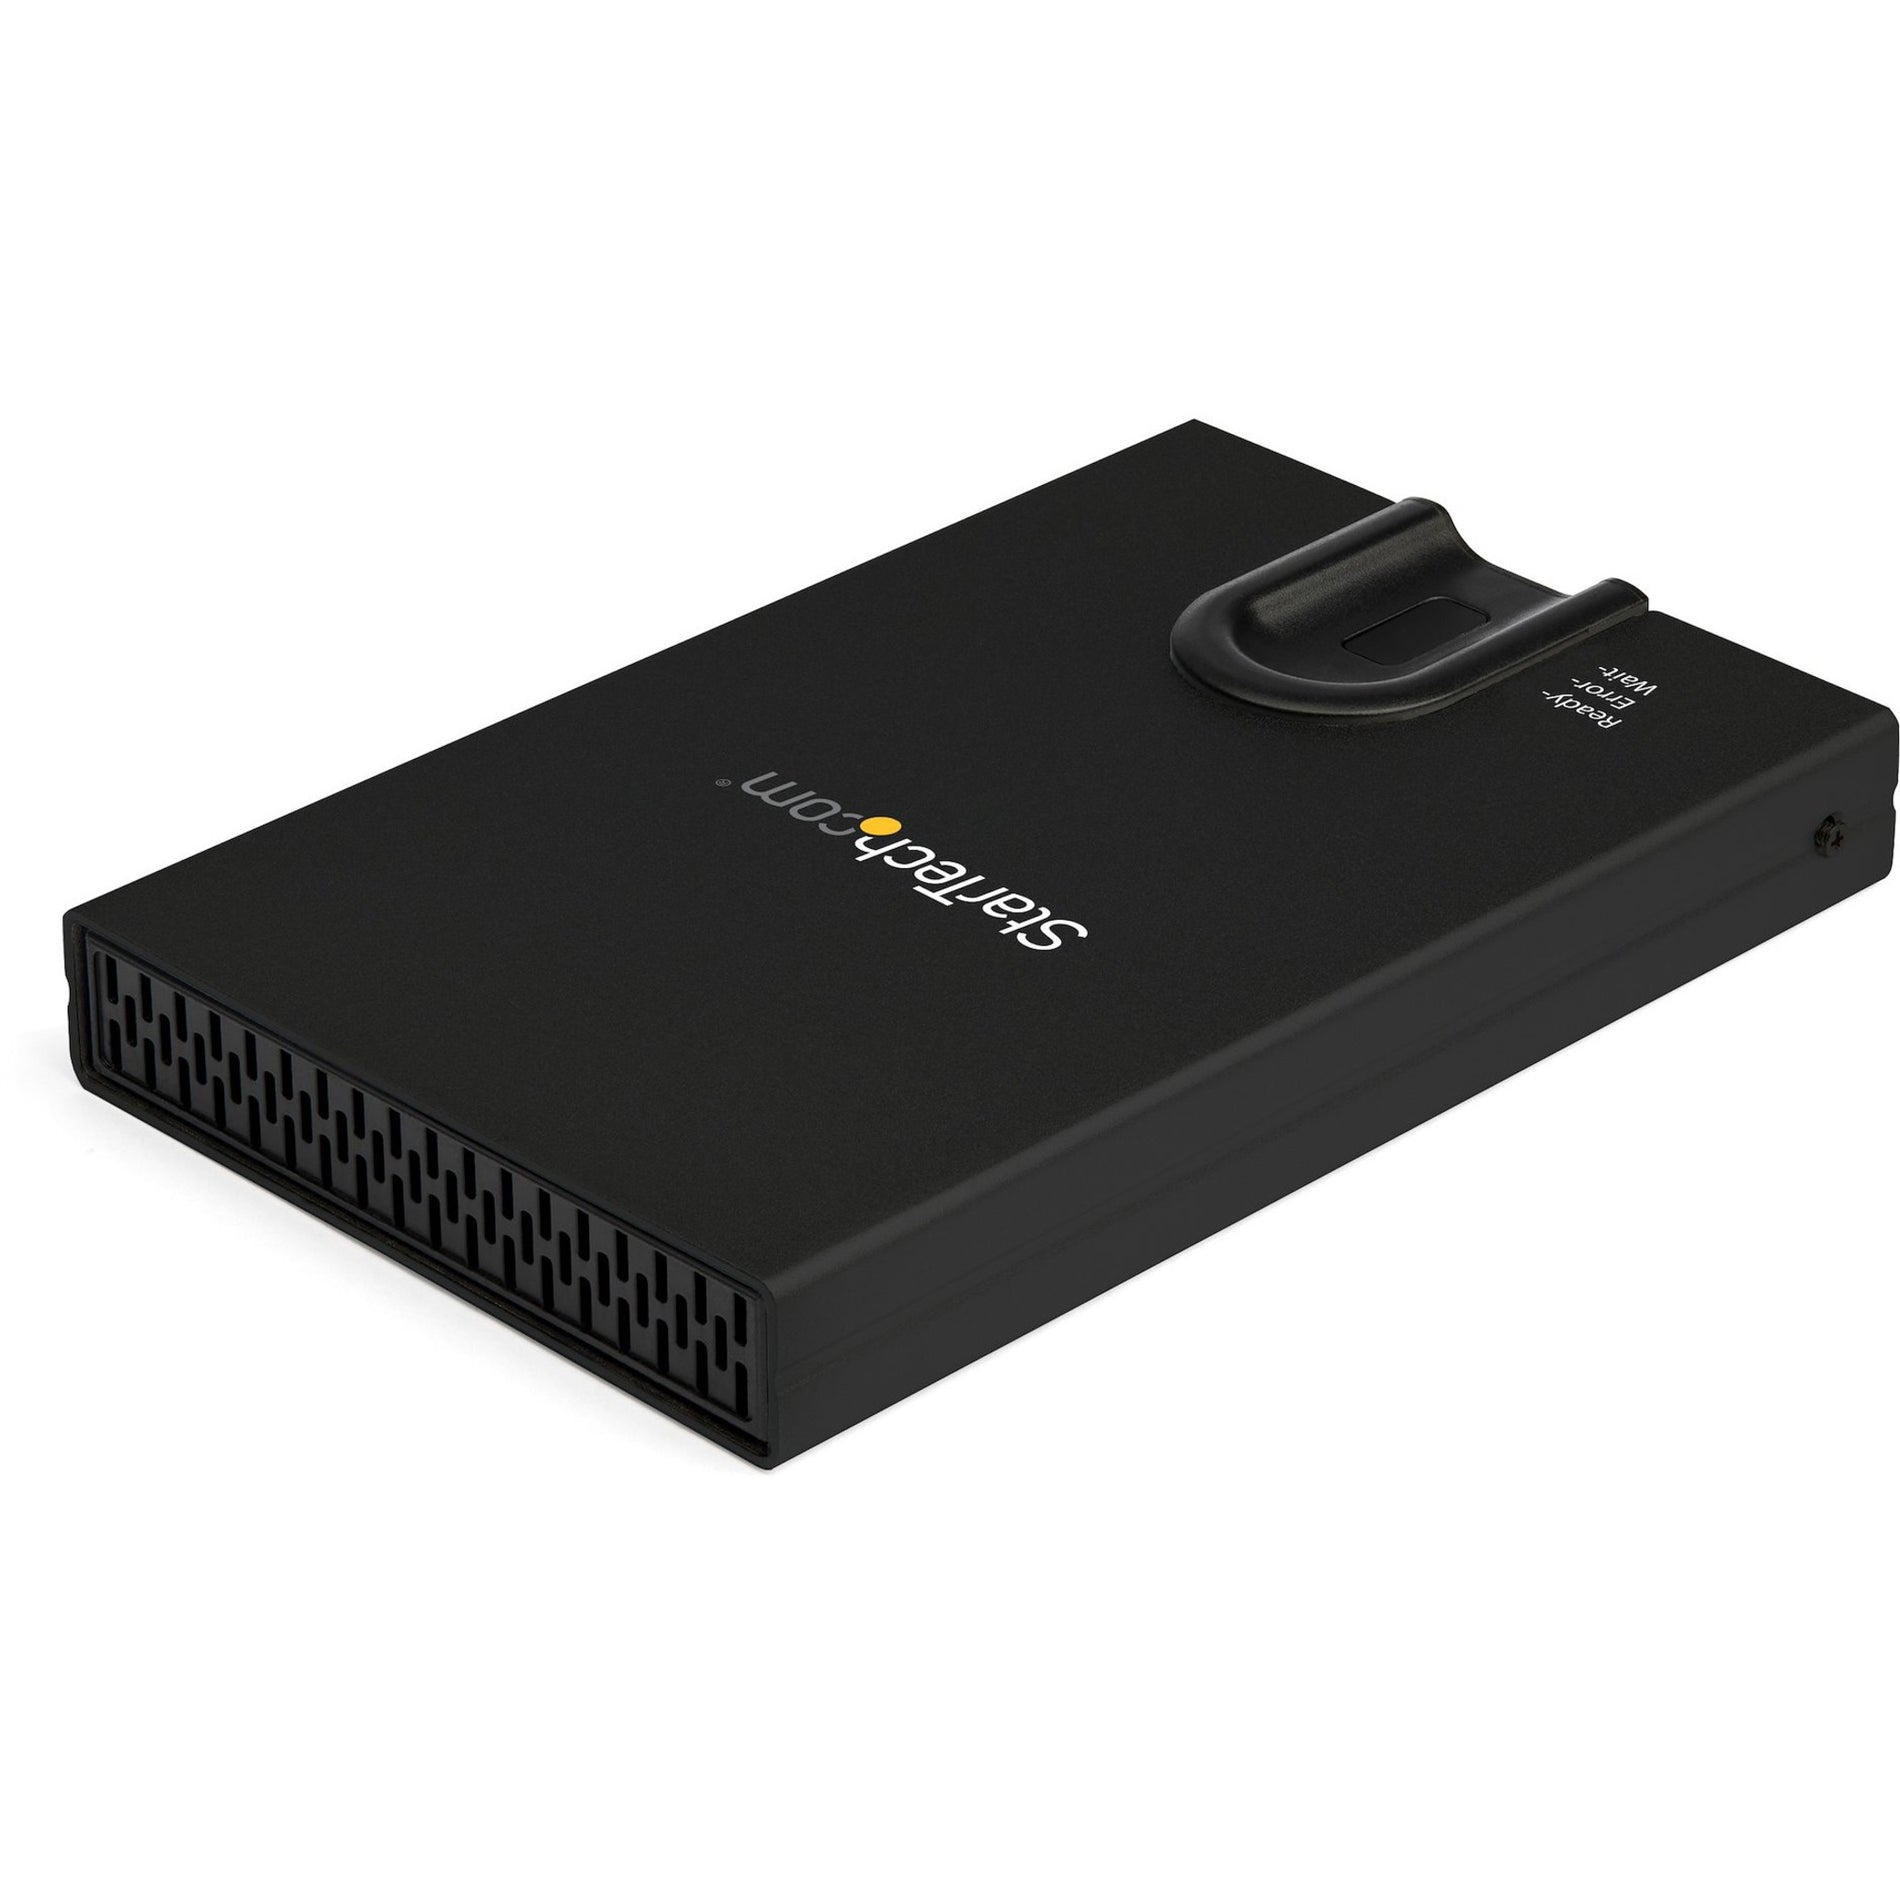 StarTech.com S251BMU3FP Encrypted Hard Drive Enclosure - Fingerprint Access - For 2.5" SATA, USB 3.1 (Gen 1) Micro-B, Black [Discontinued]